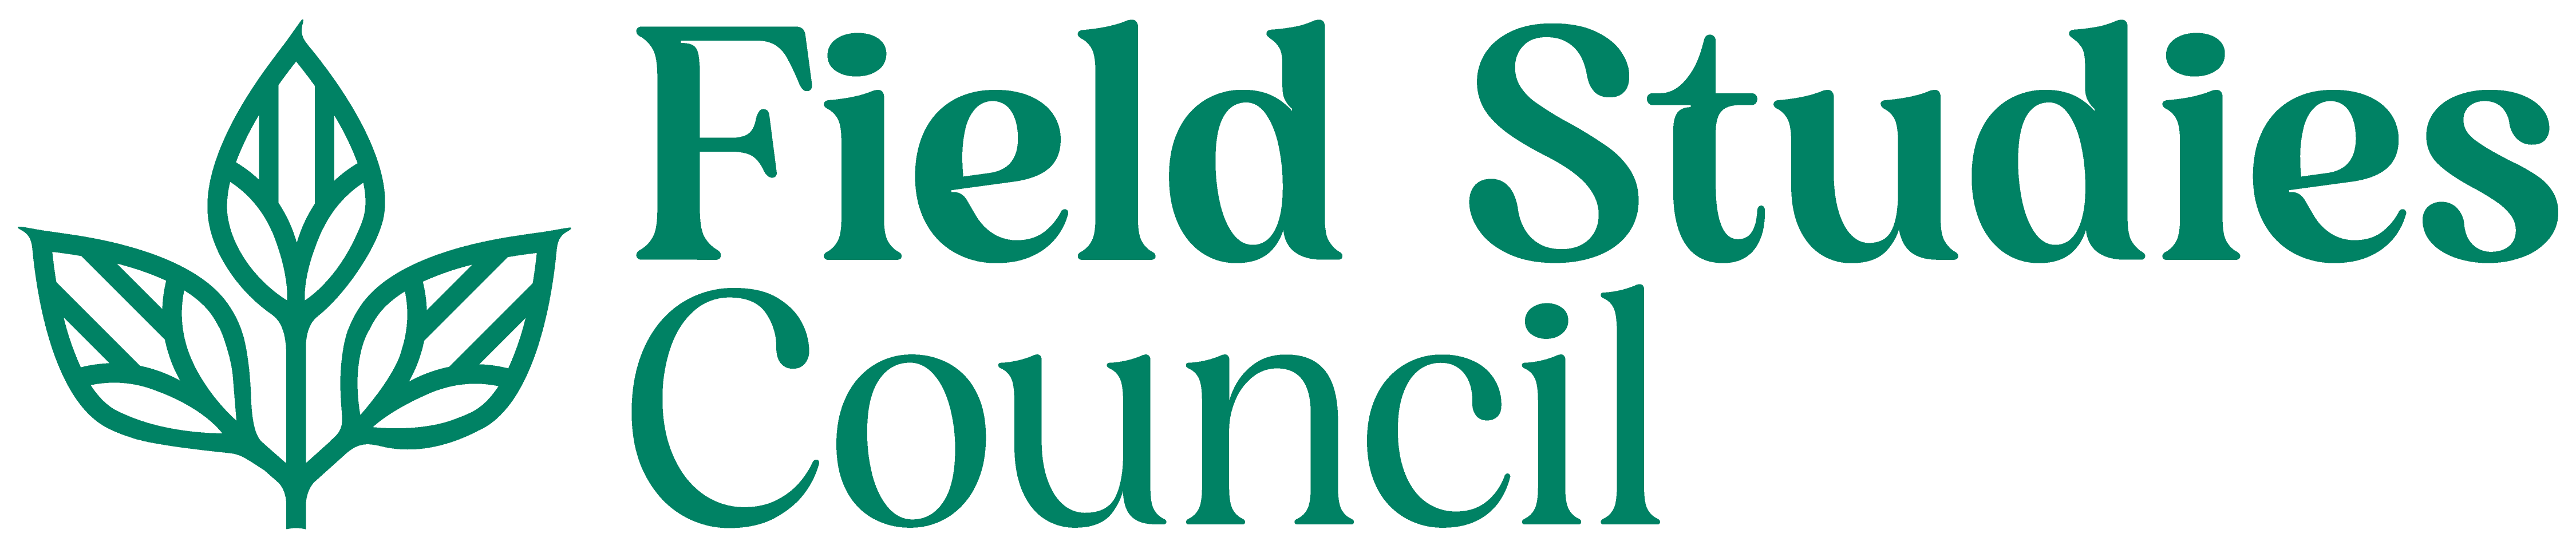 Field Studies Council Logo